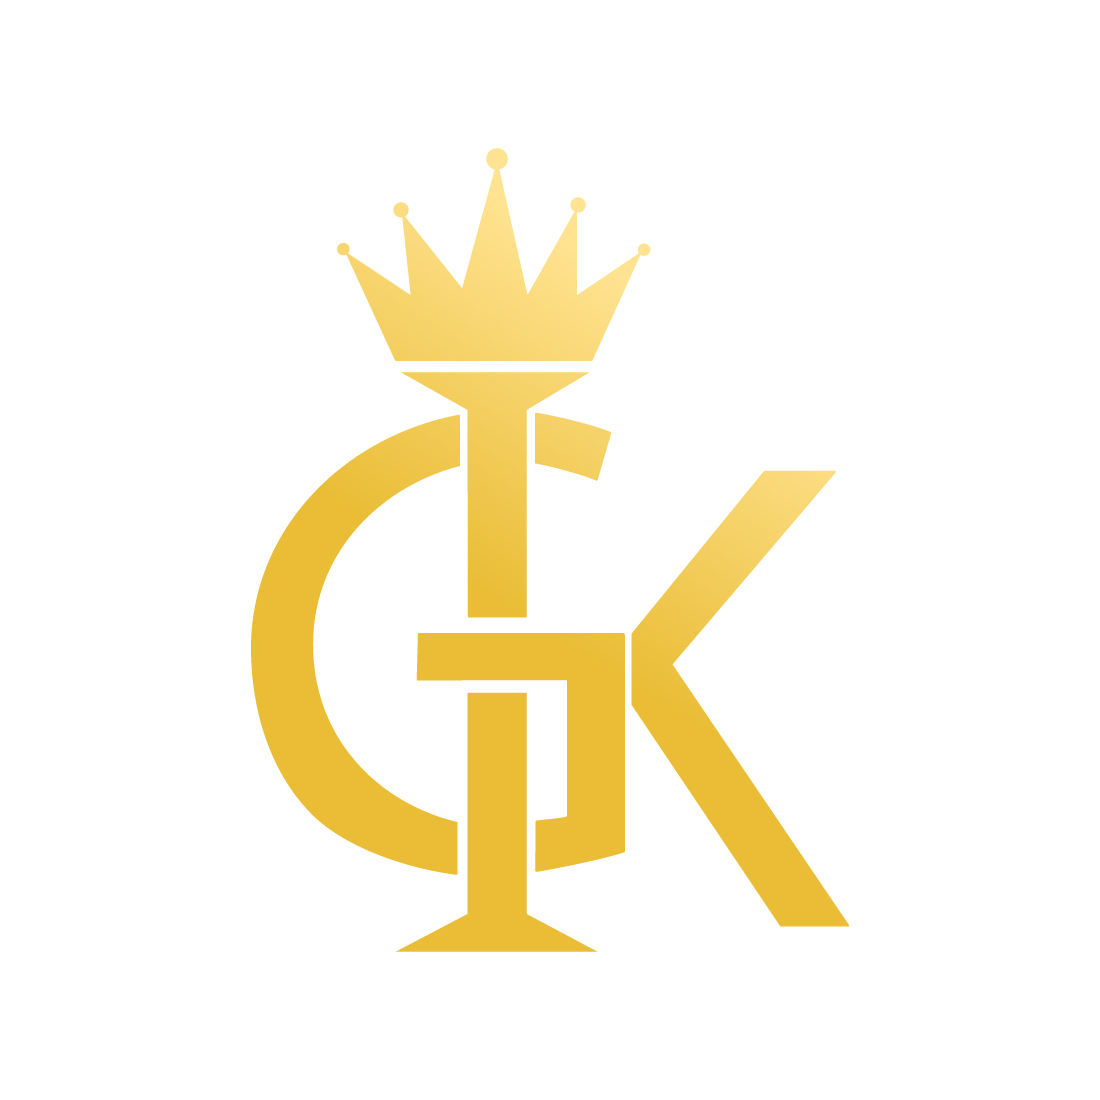 Luxury GK Crown logo design vector template images GK letters logo golden color icon KG logo design preview image.